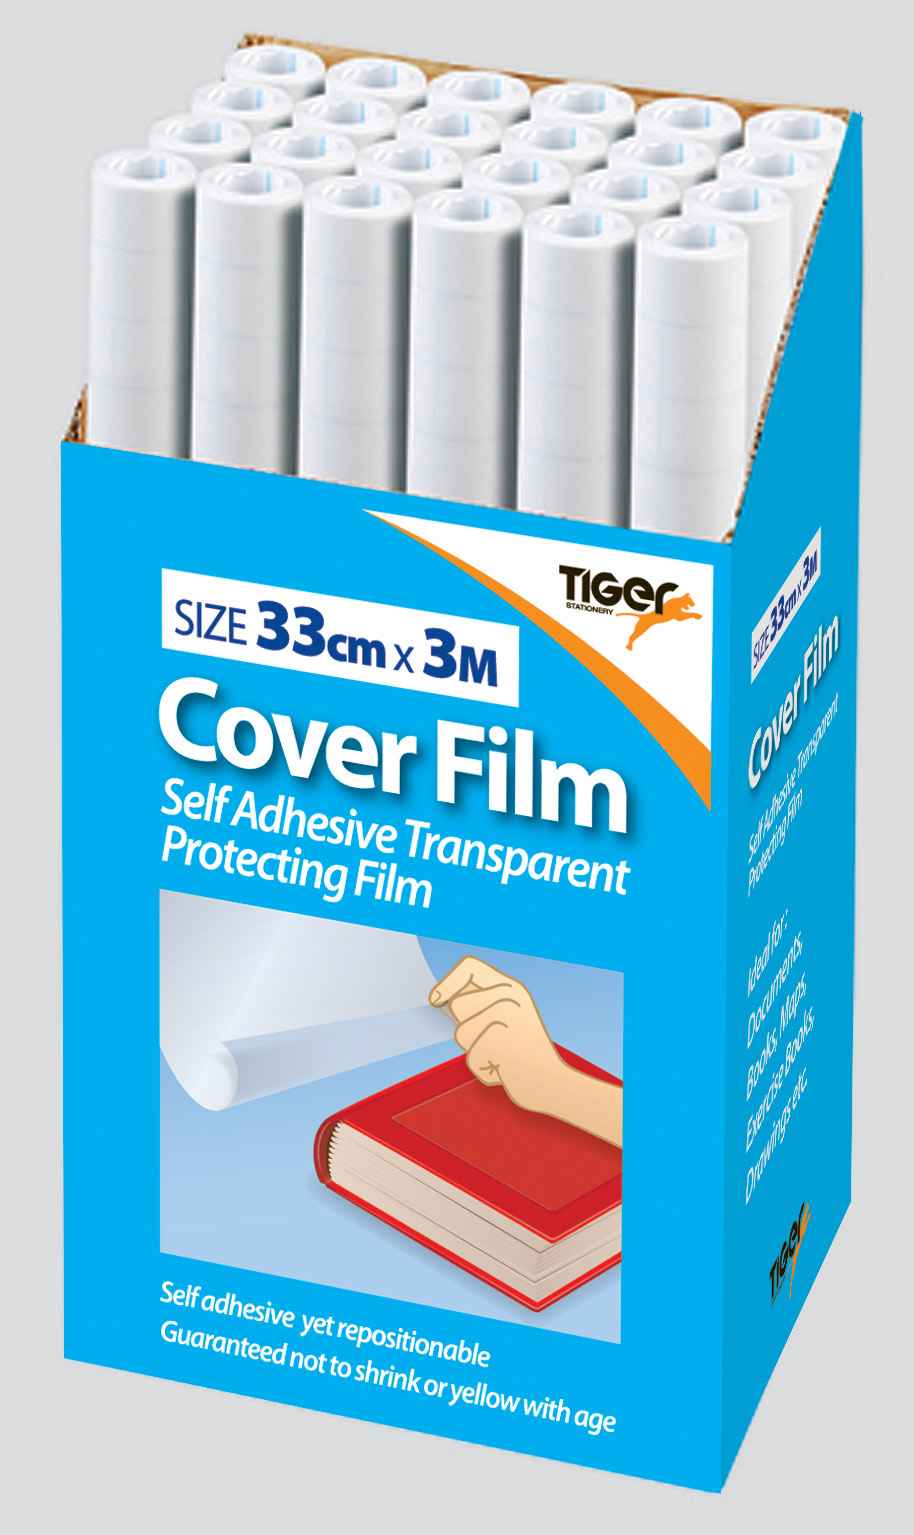 Tiger 33cm x 3m Book Cover Film